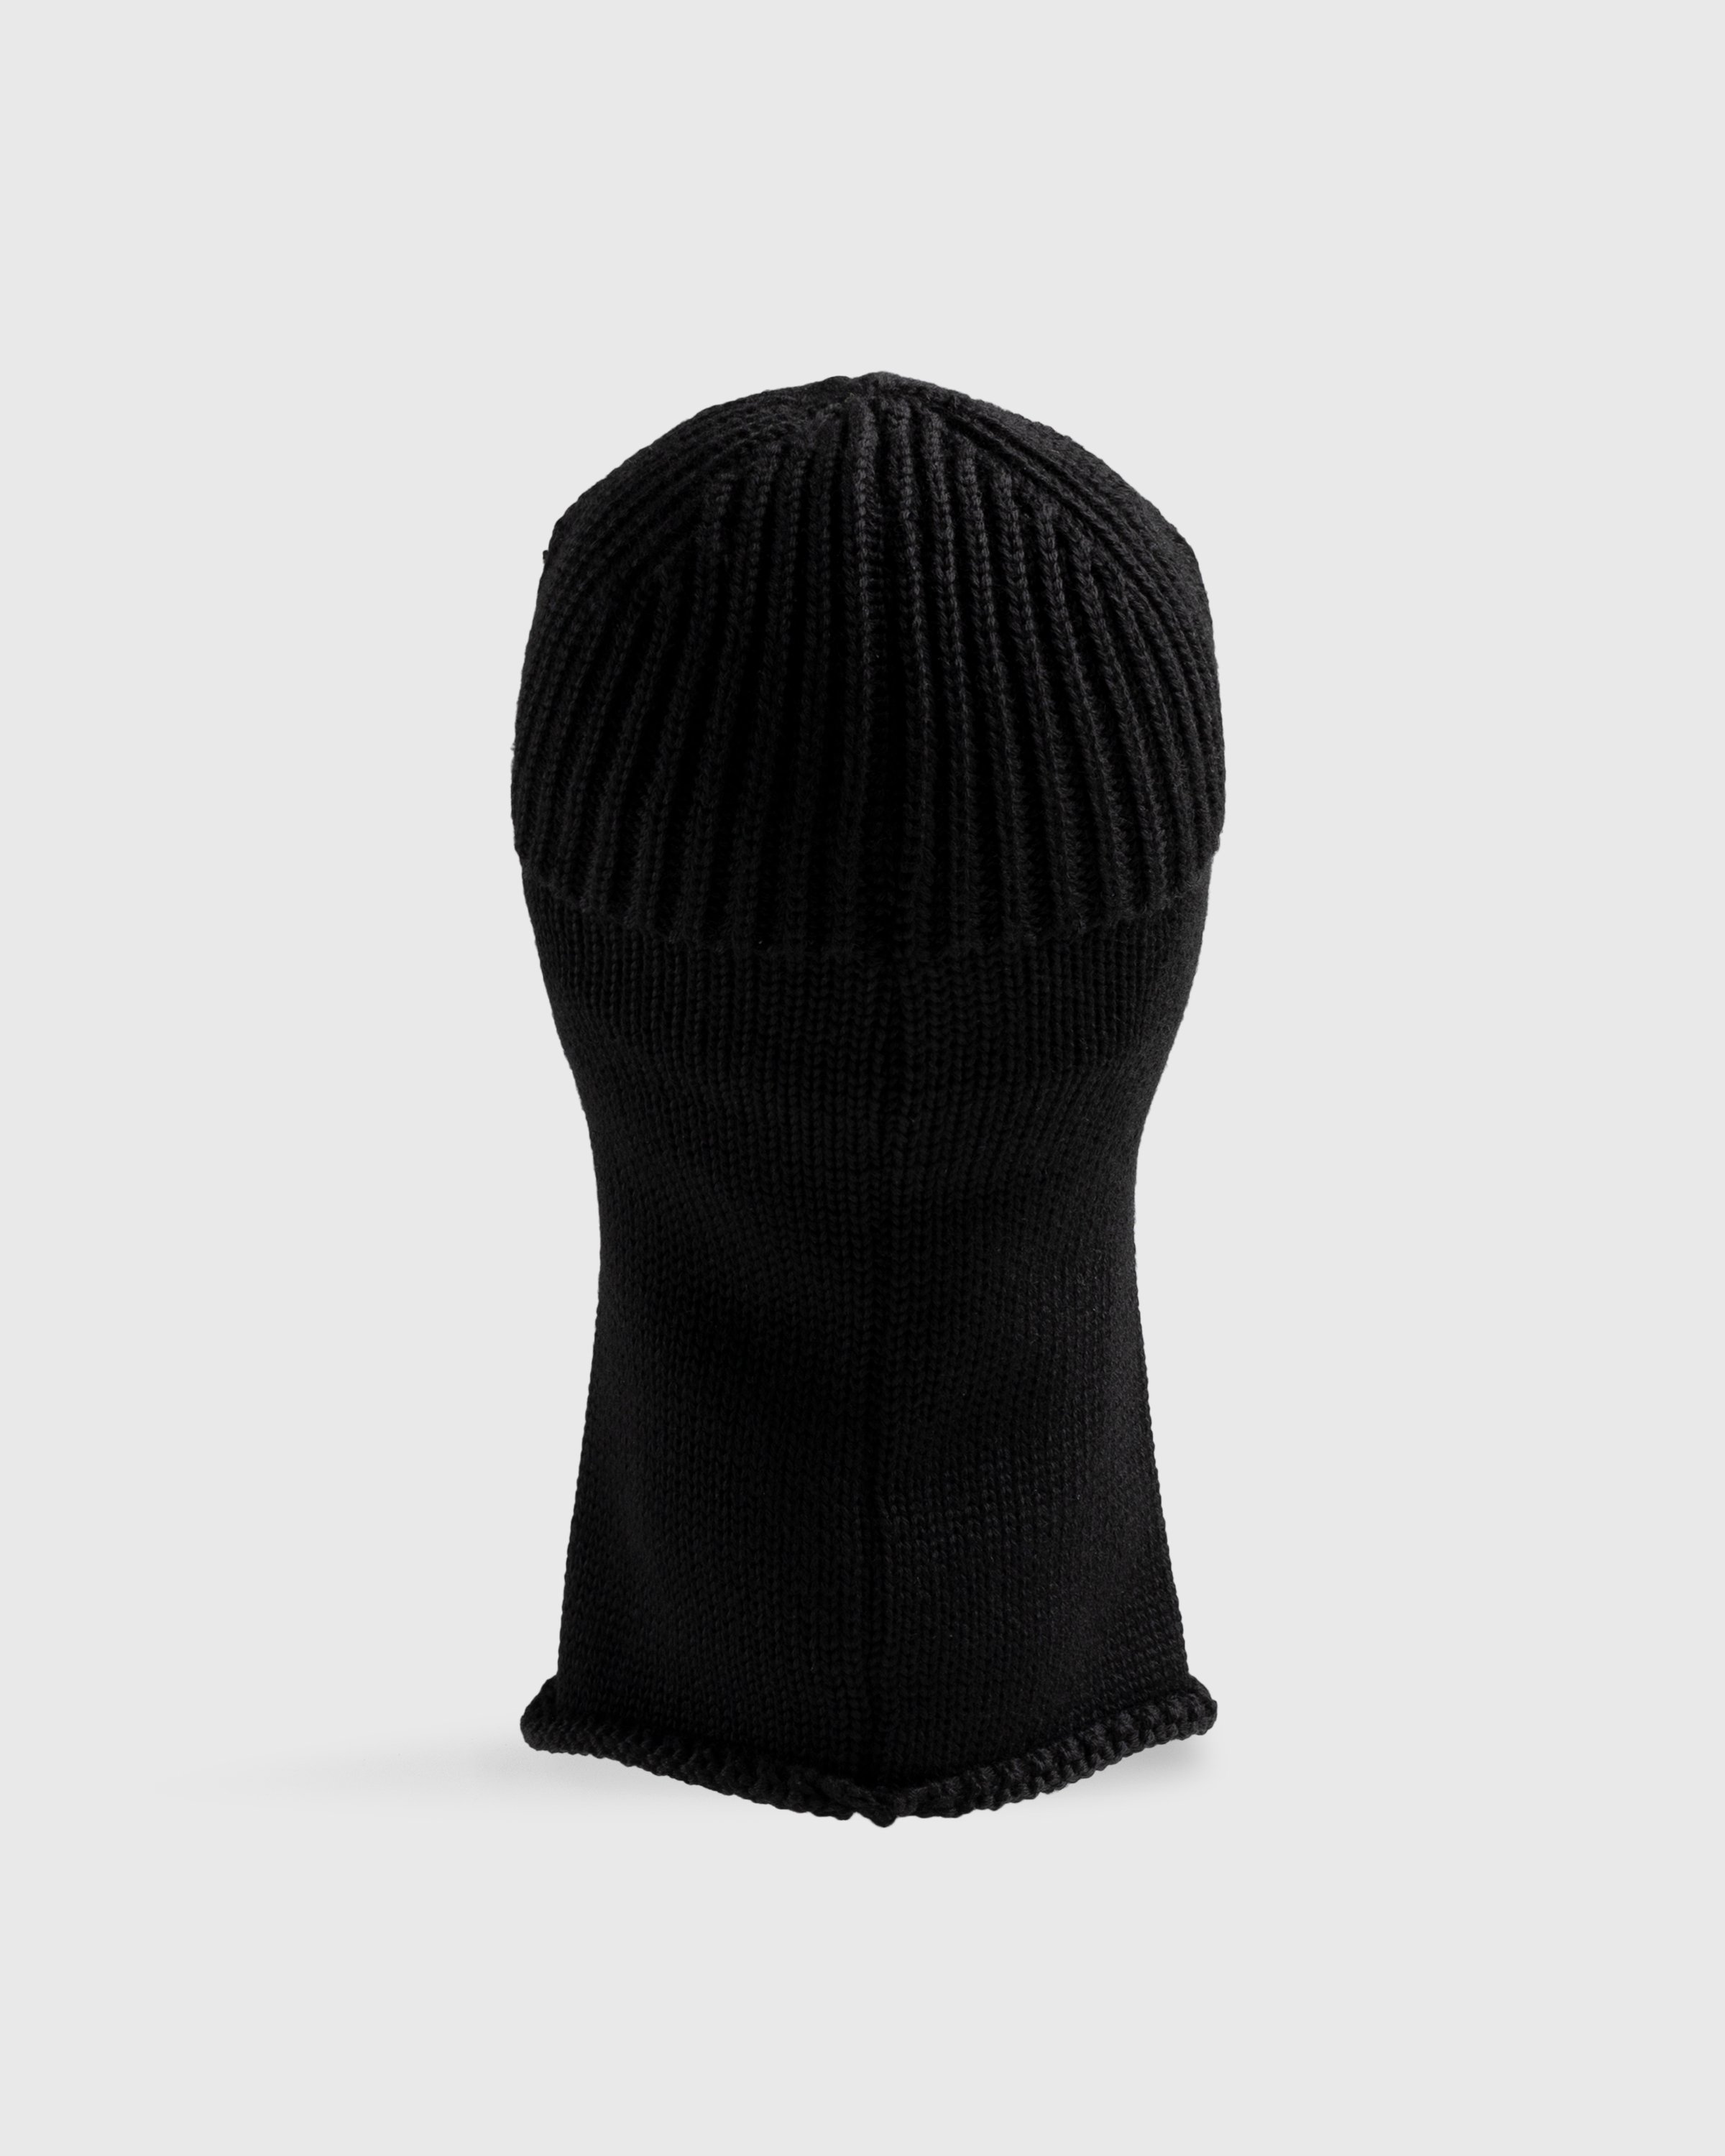 C.P. Company - Extra Fine Merino Wool Goggle Balaclava Black - Accessories - Black - Image 3